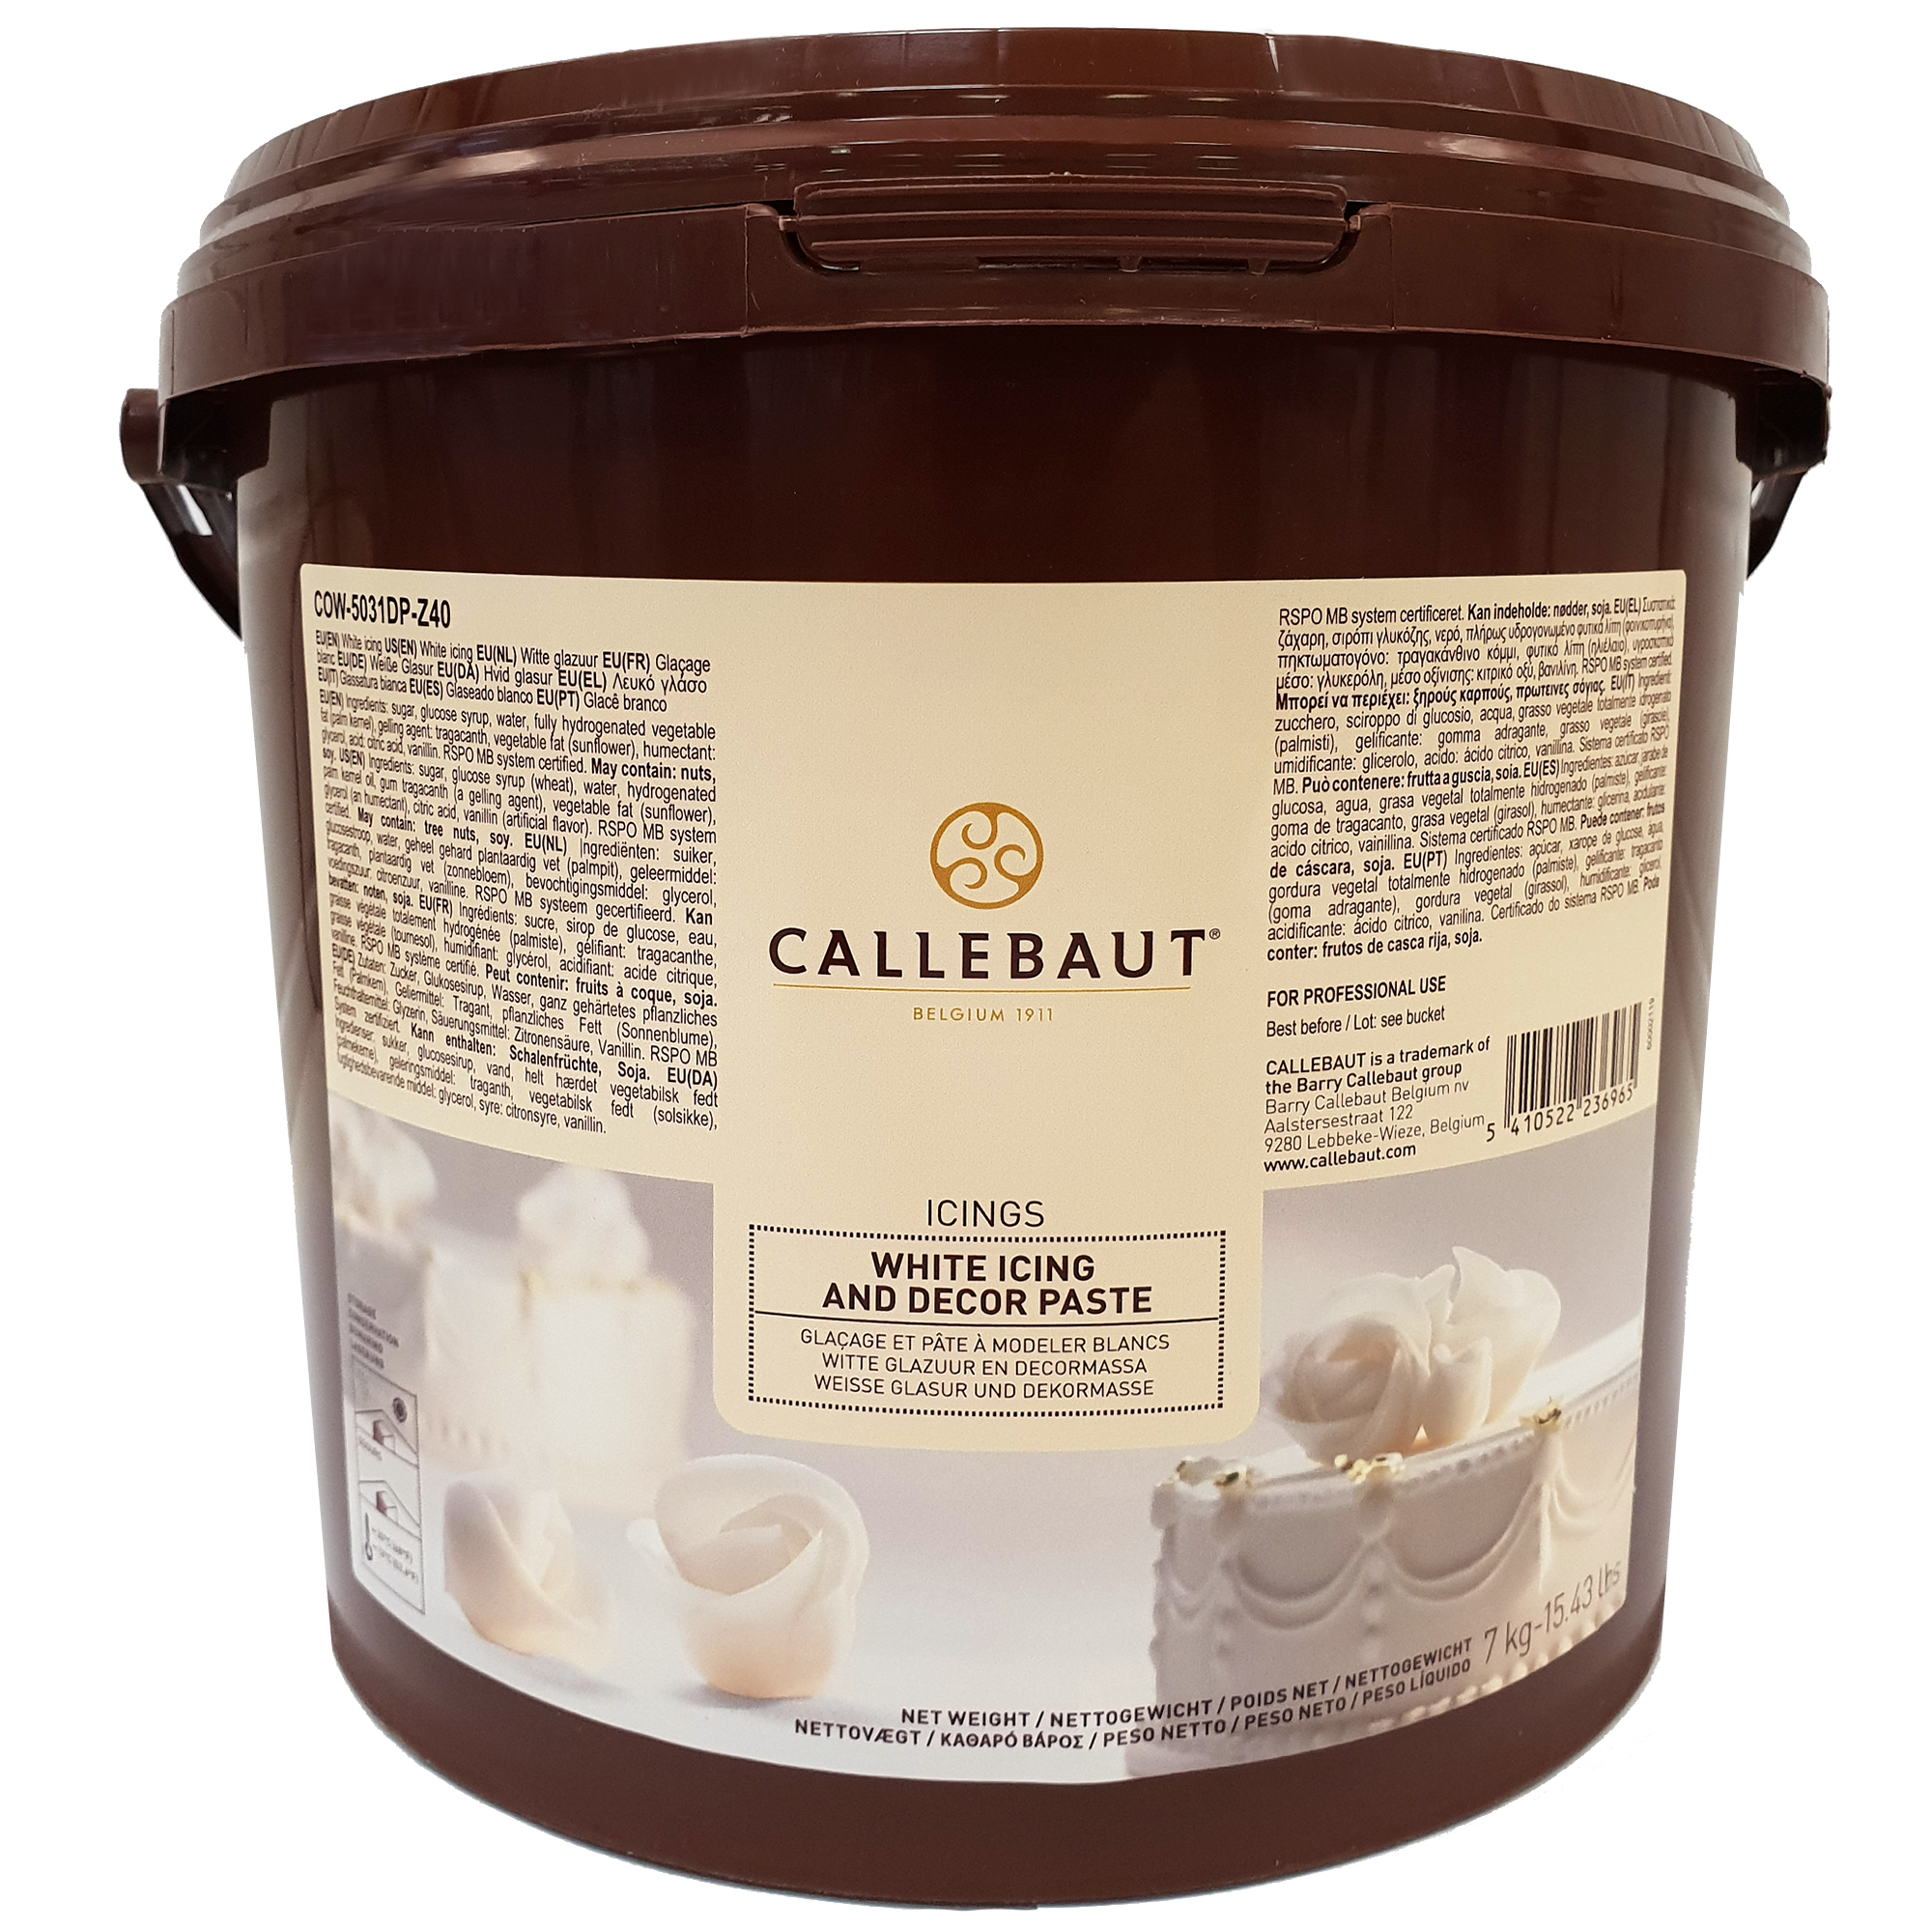 Callebaut Fondant weiss Rollfondant white Icing 7 Kg Eimer, 59,90 €